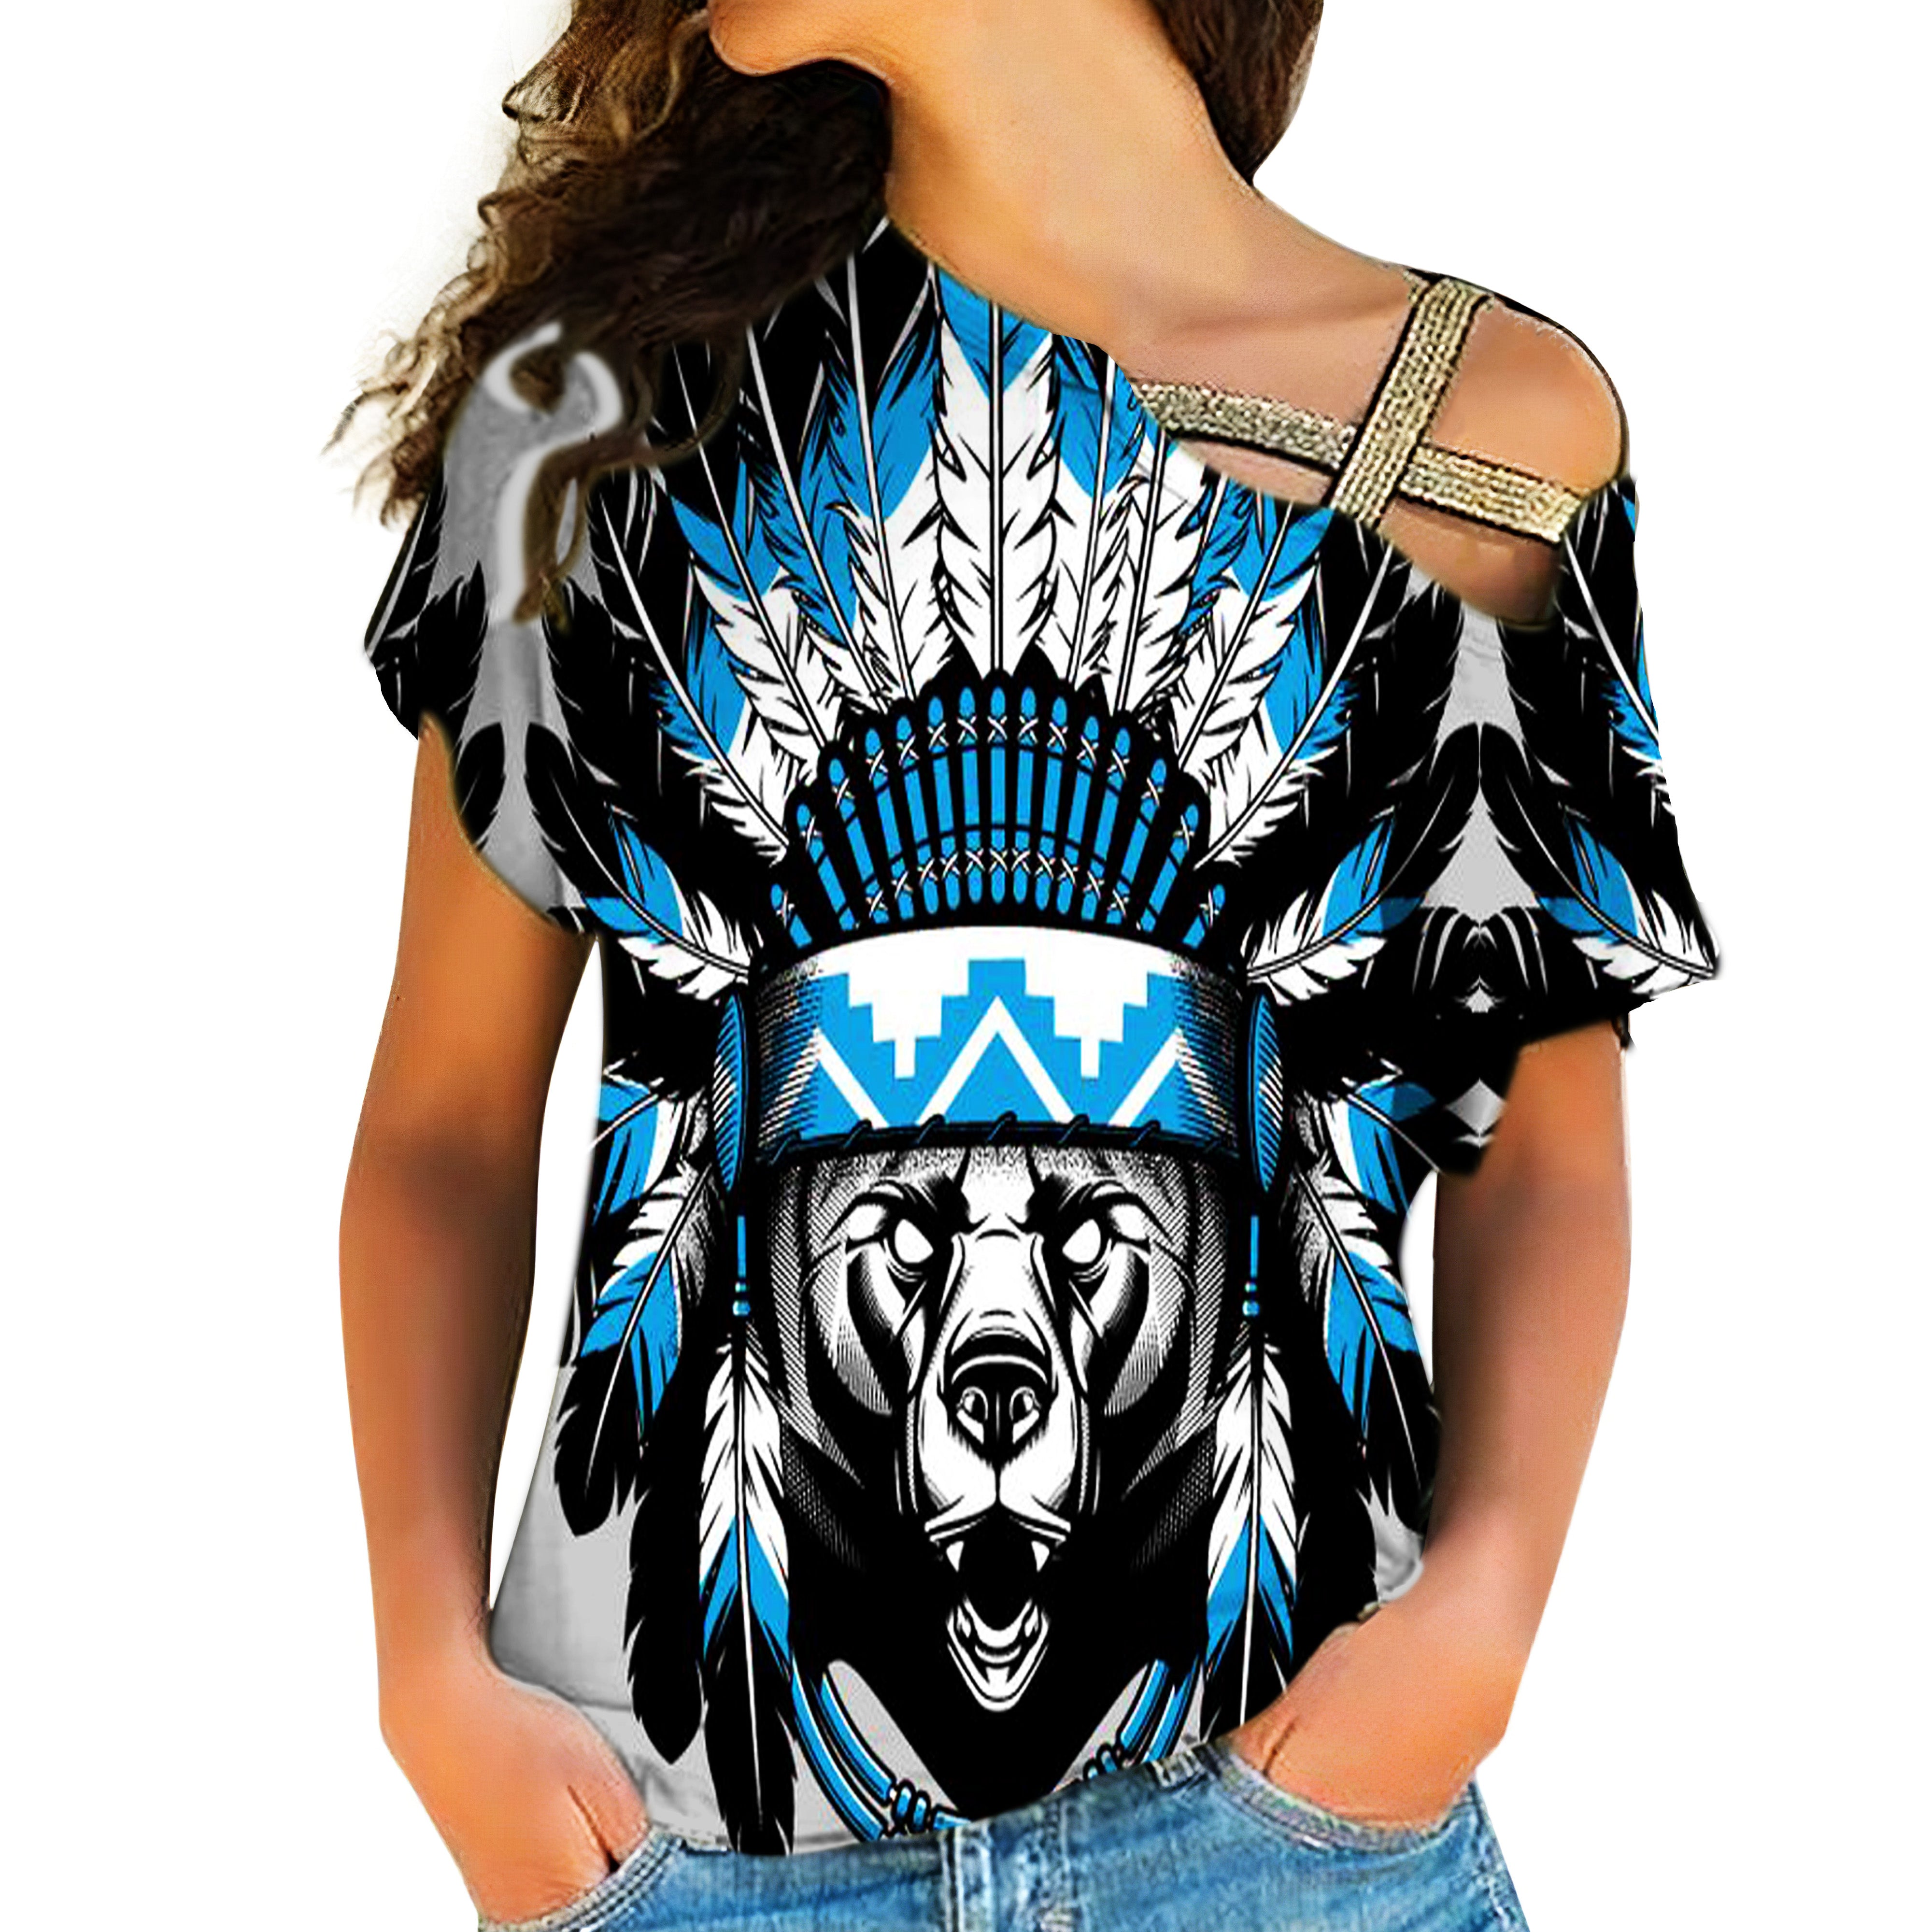 Powwow Store native american cross shoulder shirt 1137